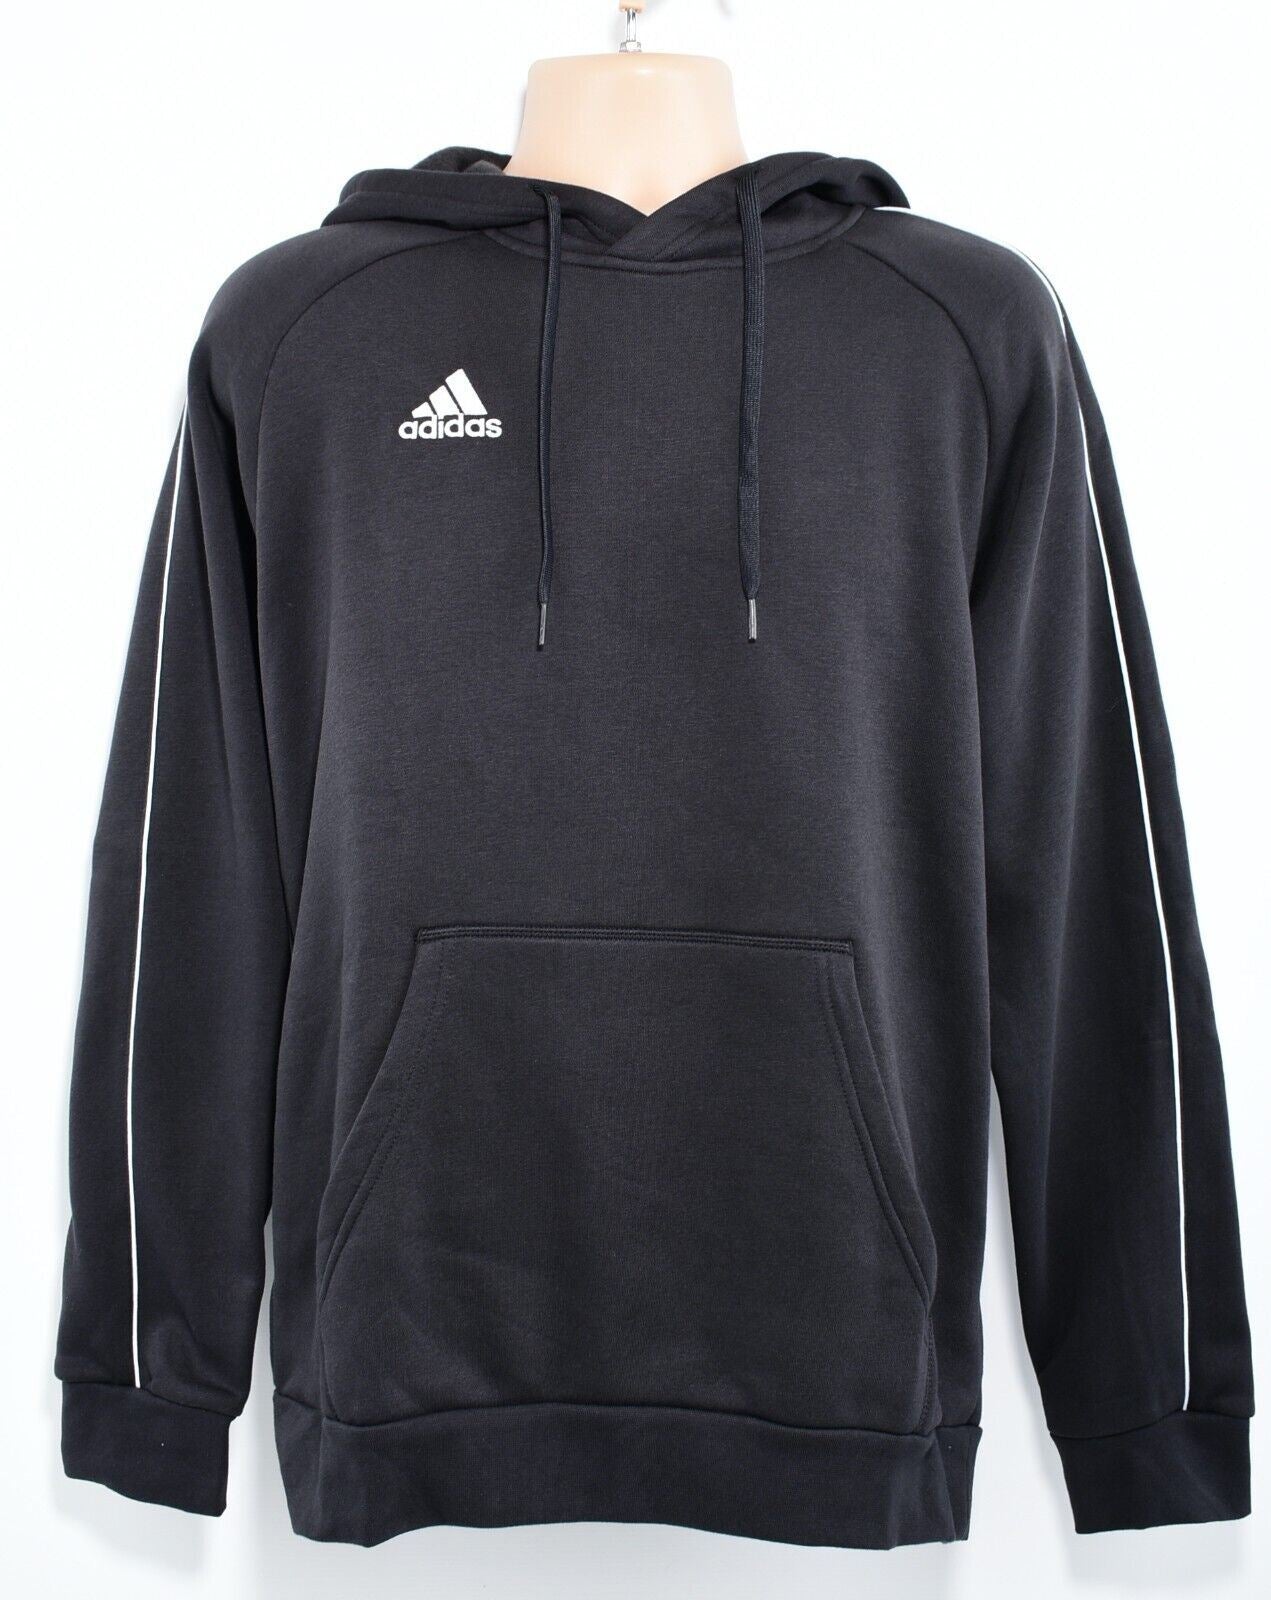 ADIDAS Mens Core 18 Fleece Lined Hoodie Sweatshirt, Black, size L